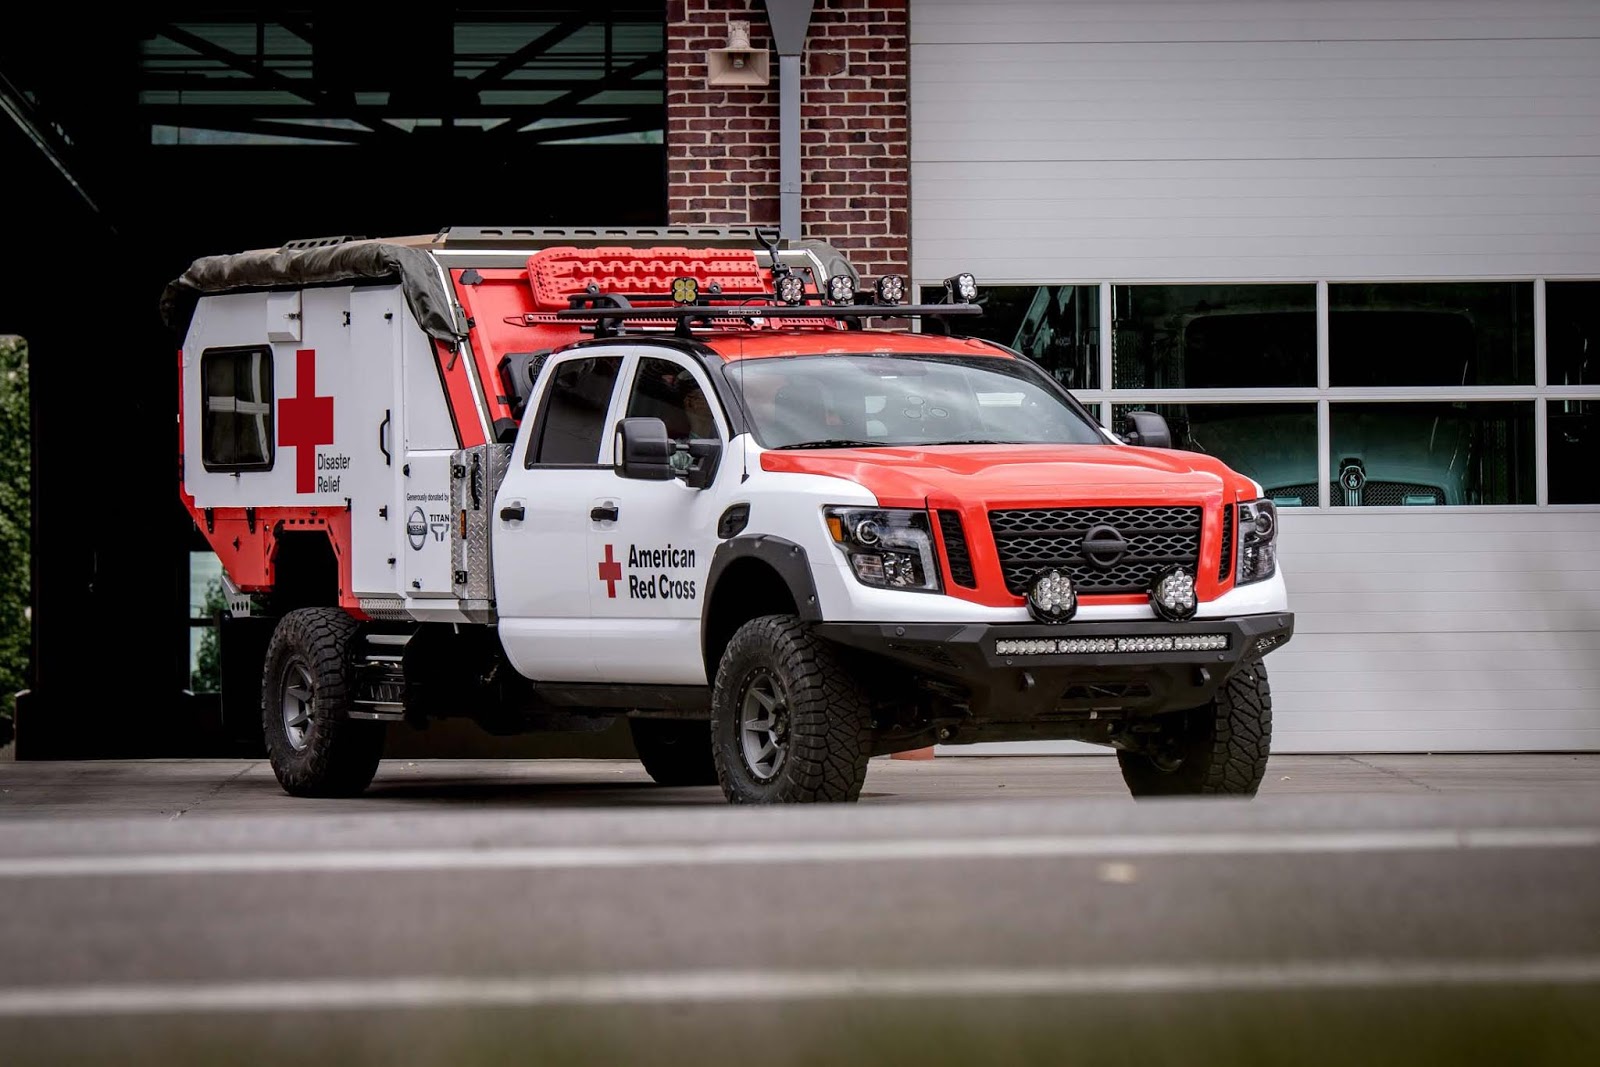 Nissan TITAN Red cross 2B252852529 Η Nissan και ο Ερυθρός Σταυρός έκαναν τον Τιτάνα... νοσοκομείο